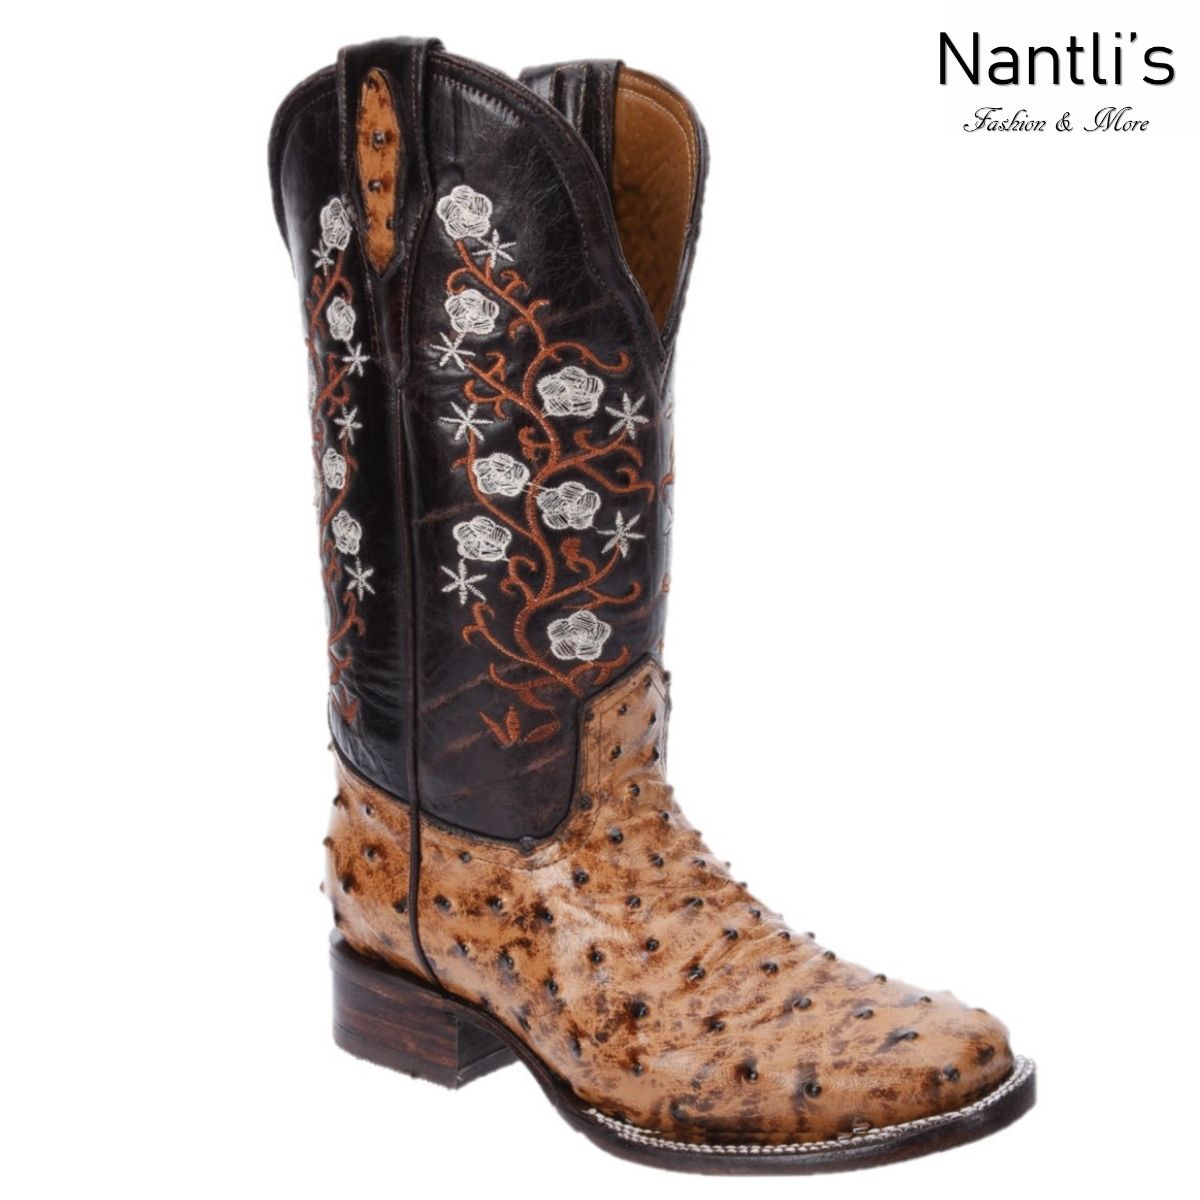 Western Boots / Botas Vaqueras – Nantli's